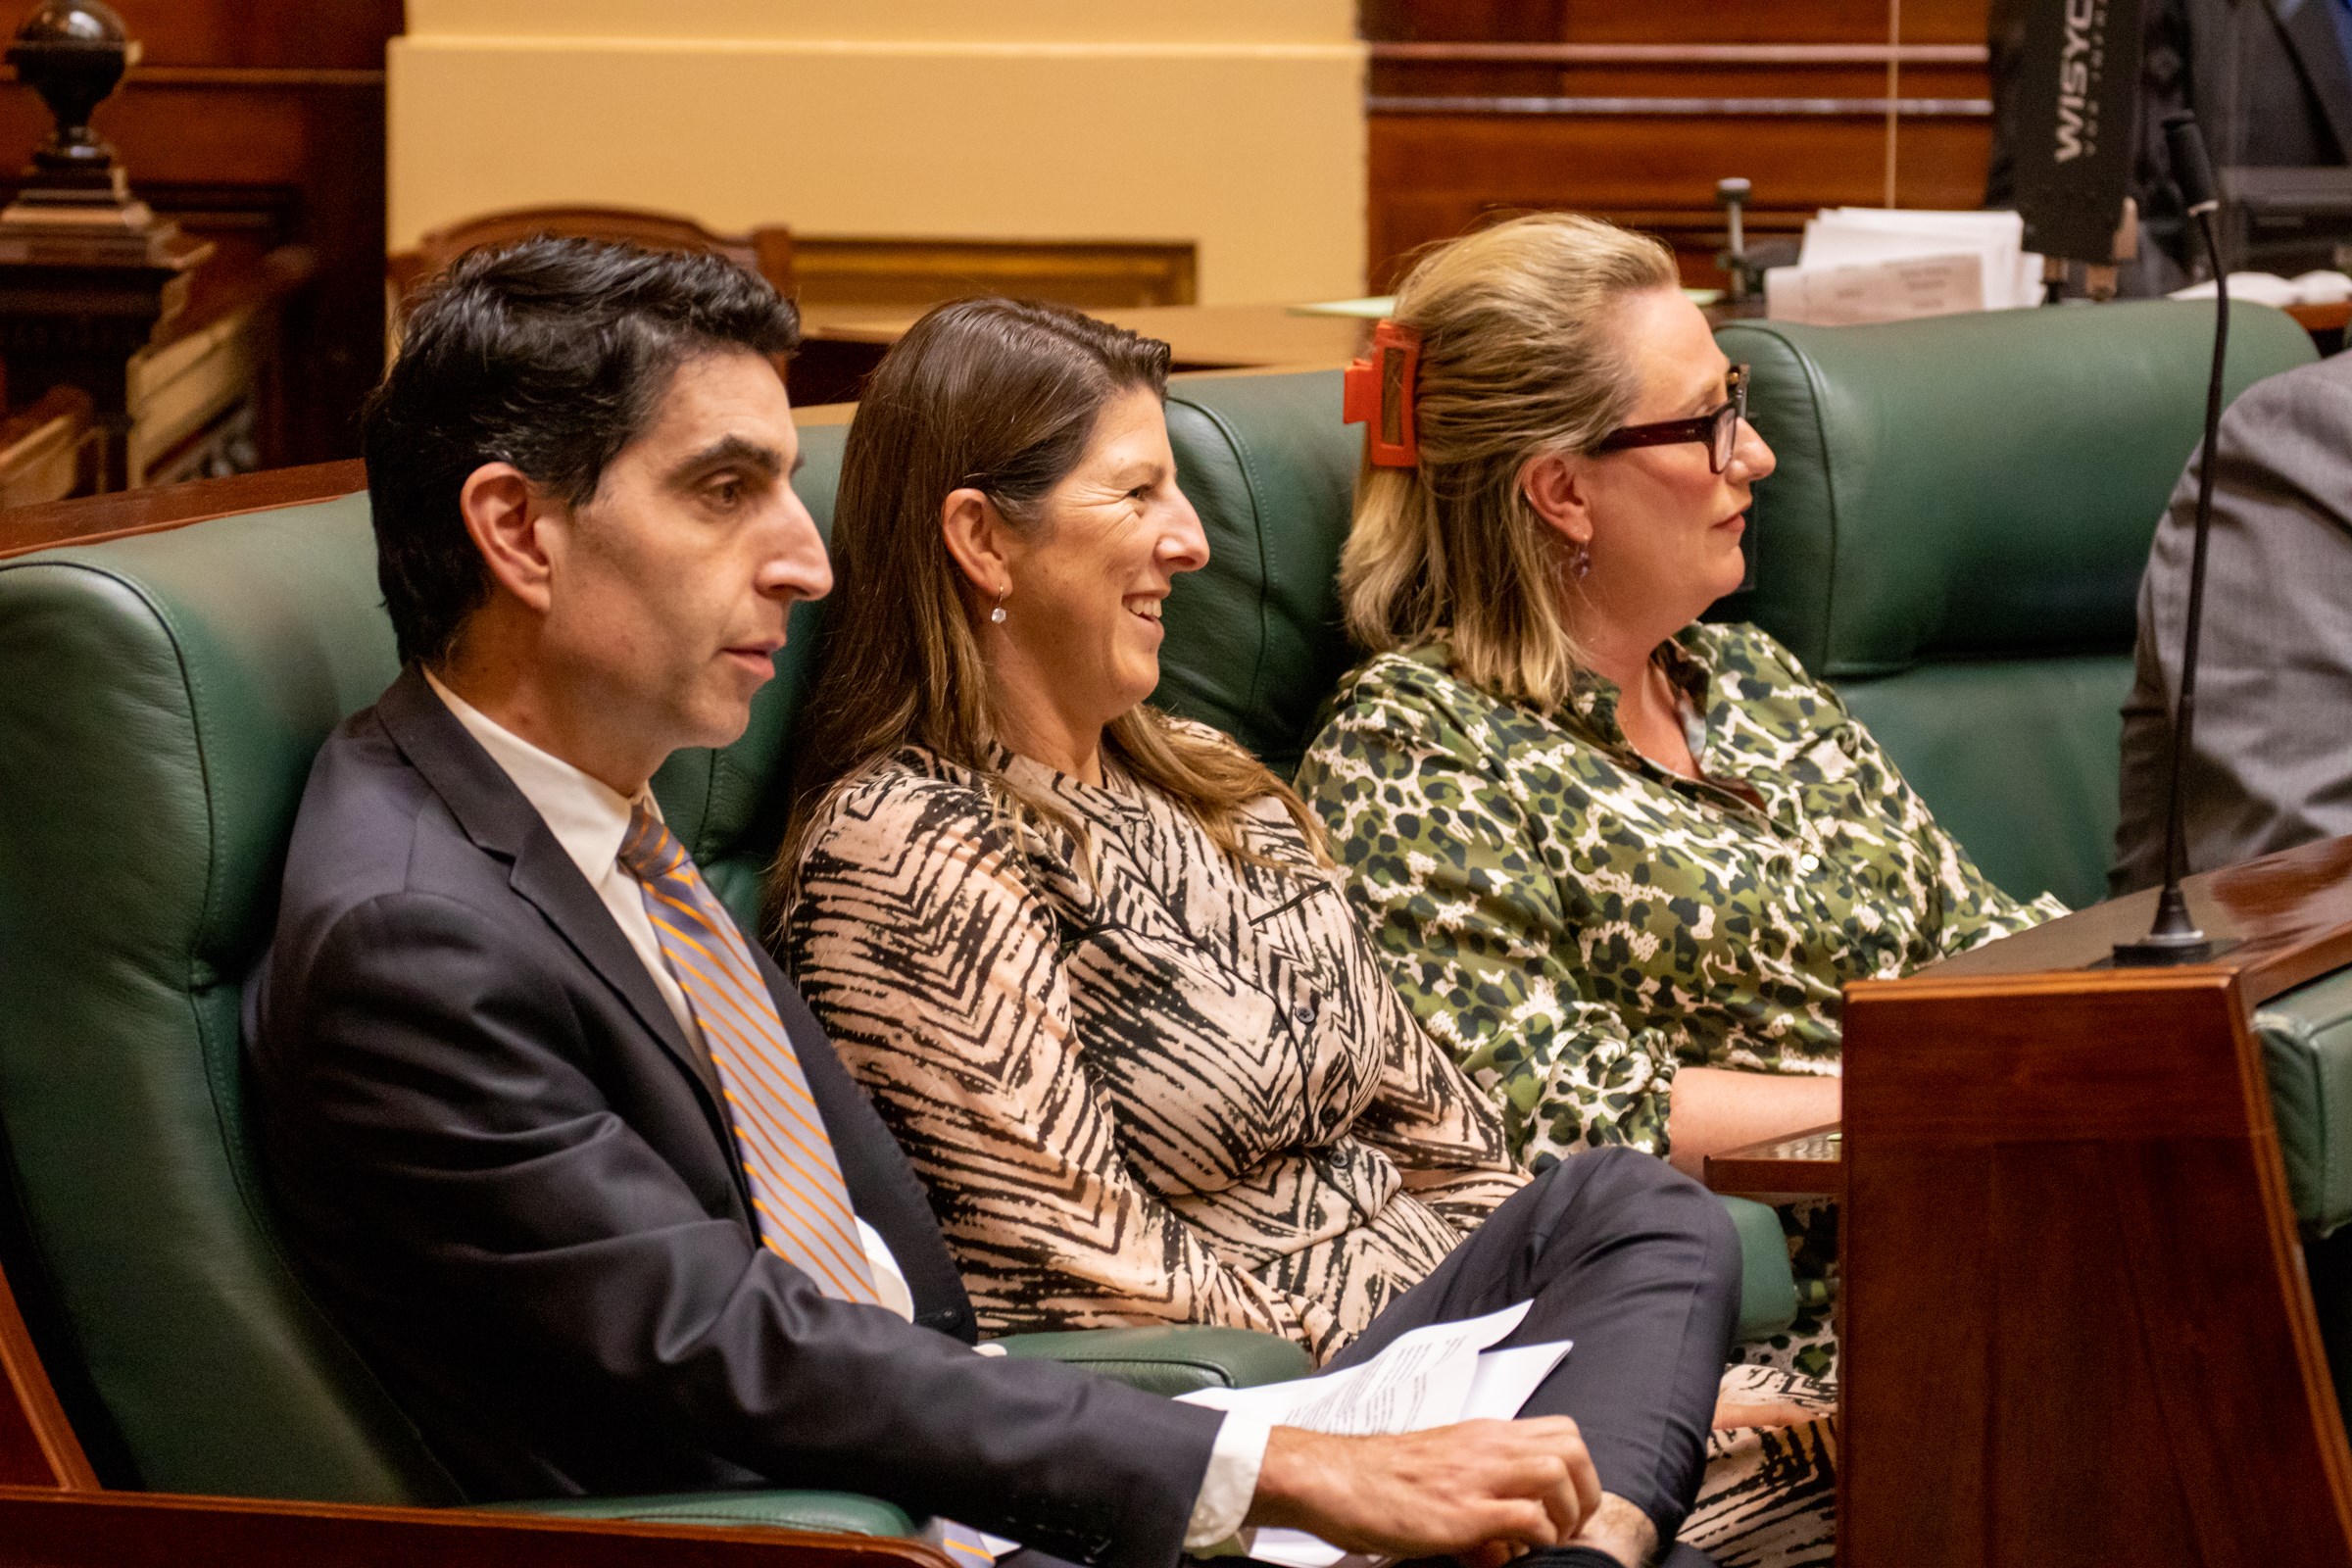 Legislative Assembly sitting